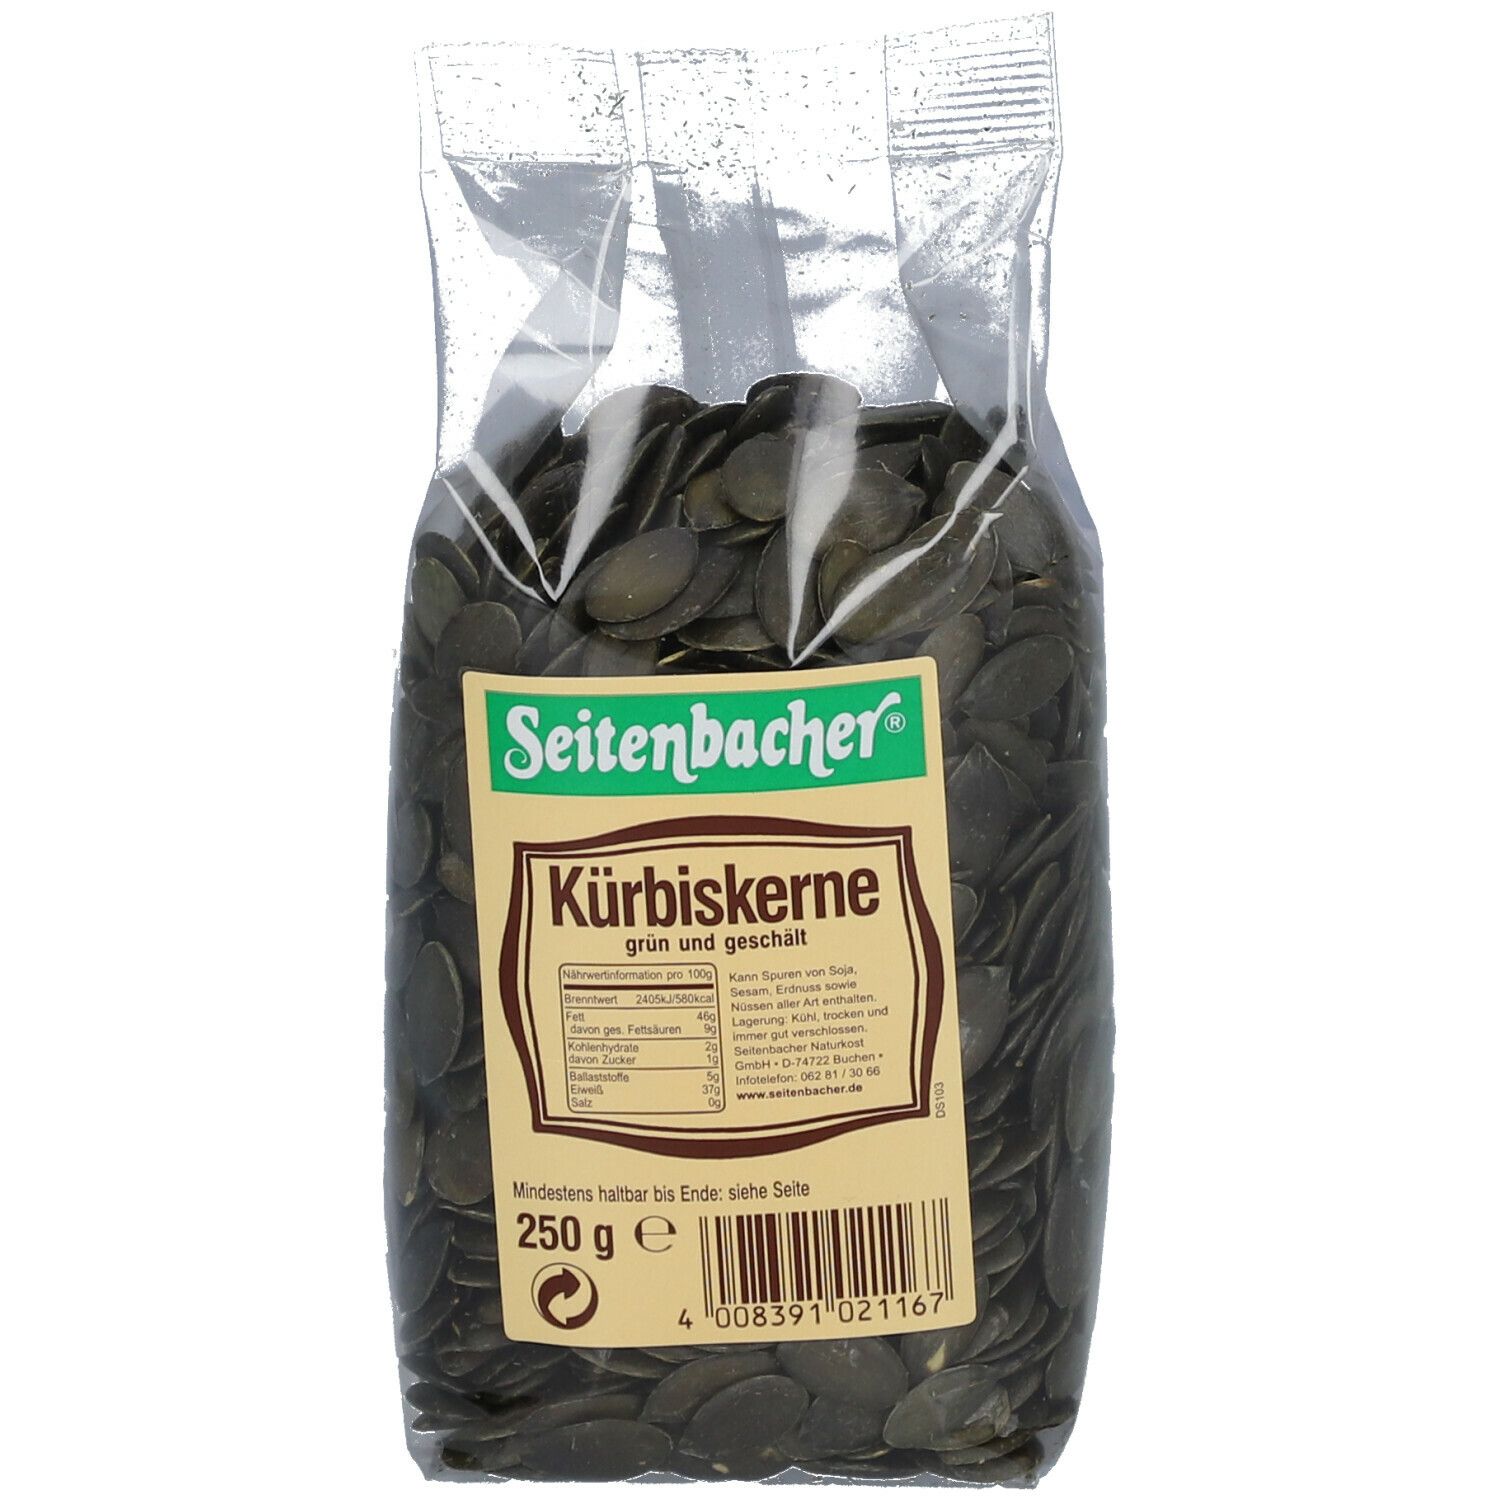 Seitenbacher® Kürbiskerne